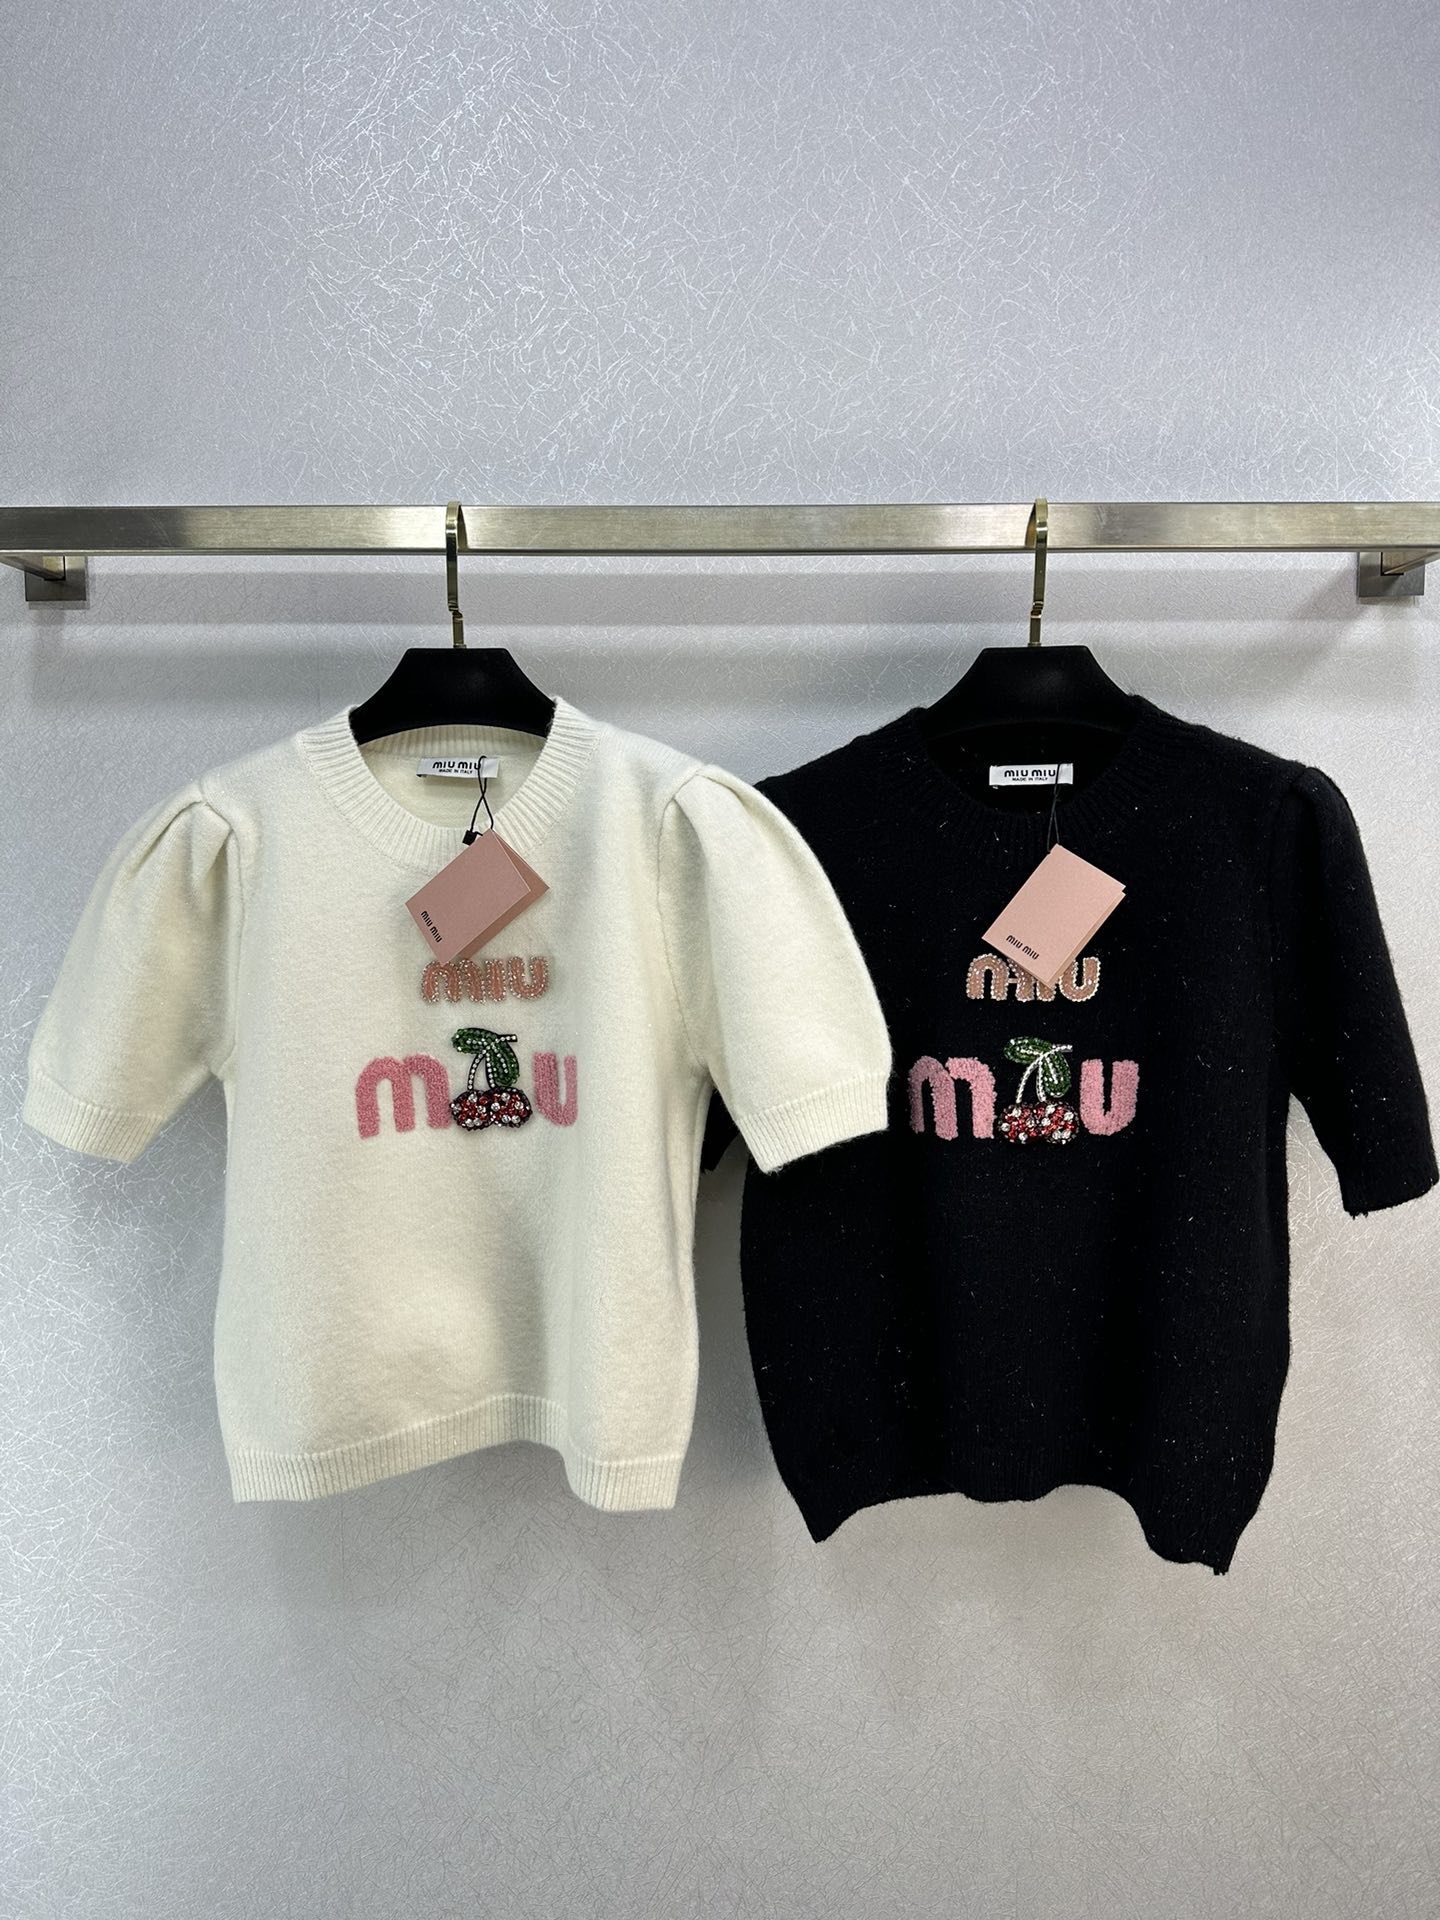 MiuMiu Clothing Tank Tops&Camis Pink Knitting Spring Collection